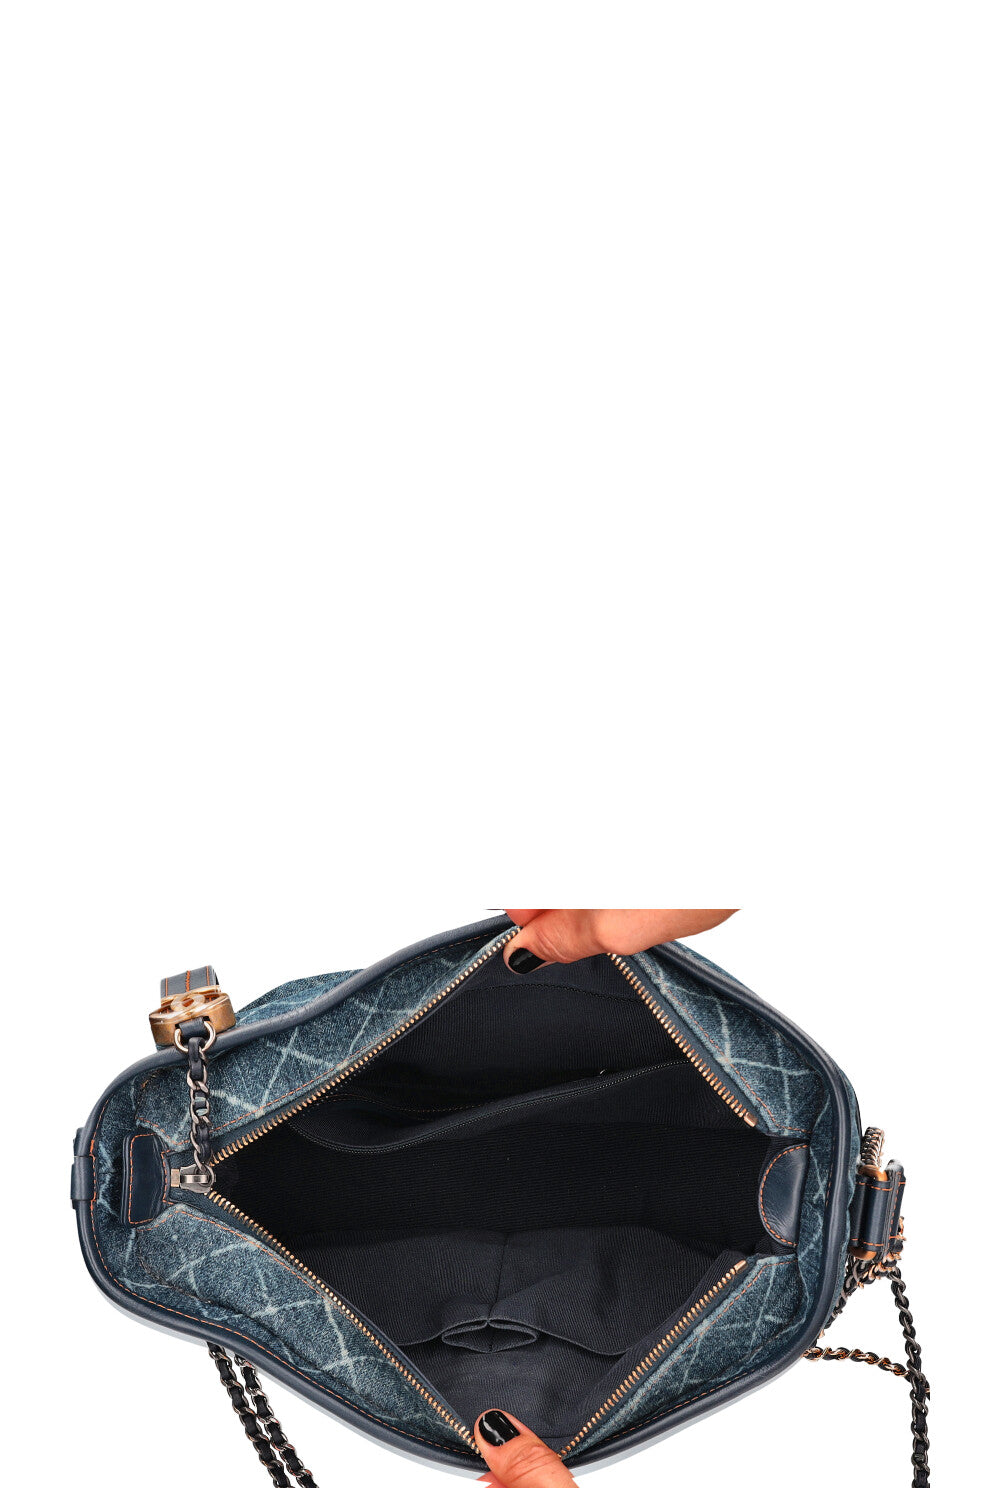 CHANEL GABRIELLE BAG - Best Replica Celine Handbags